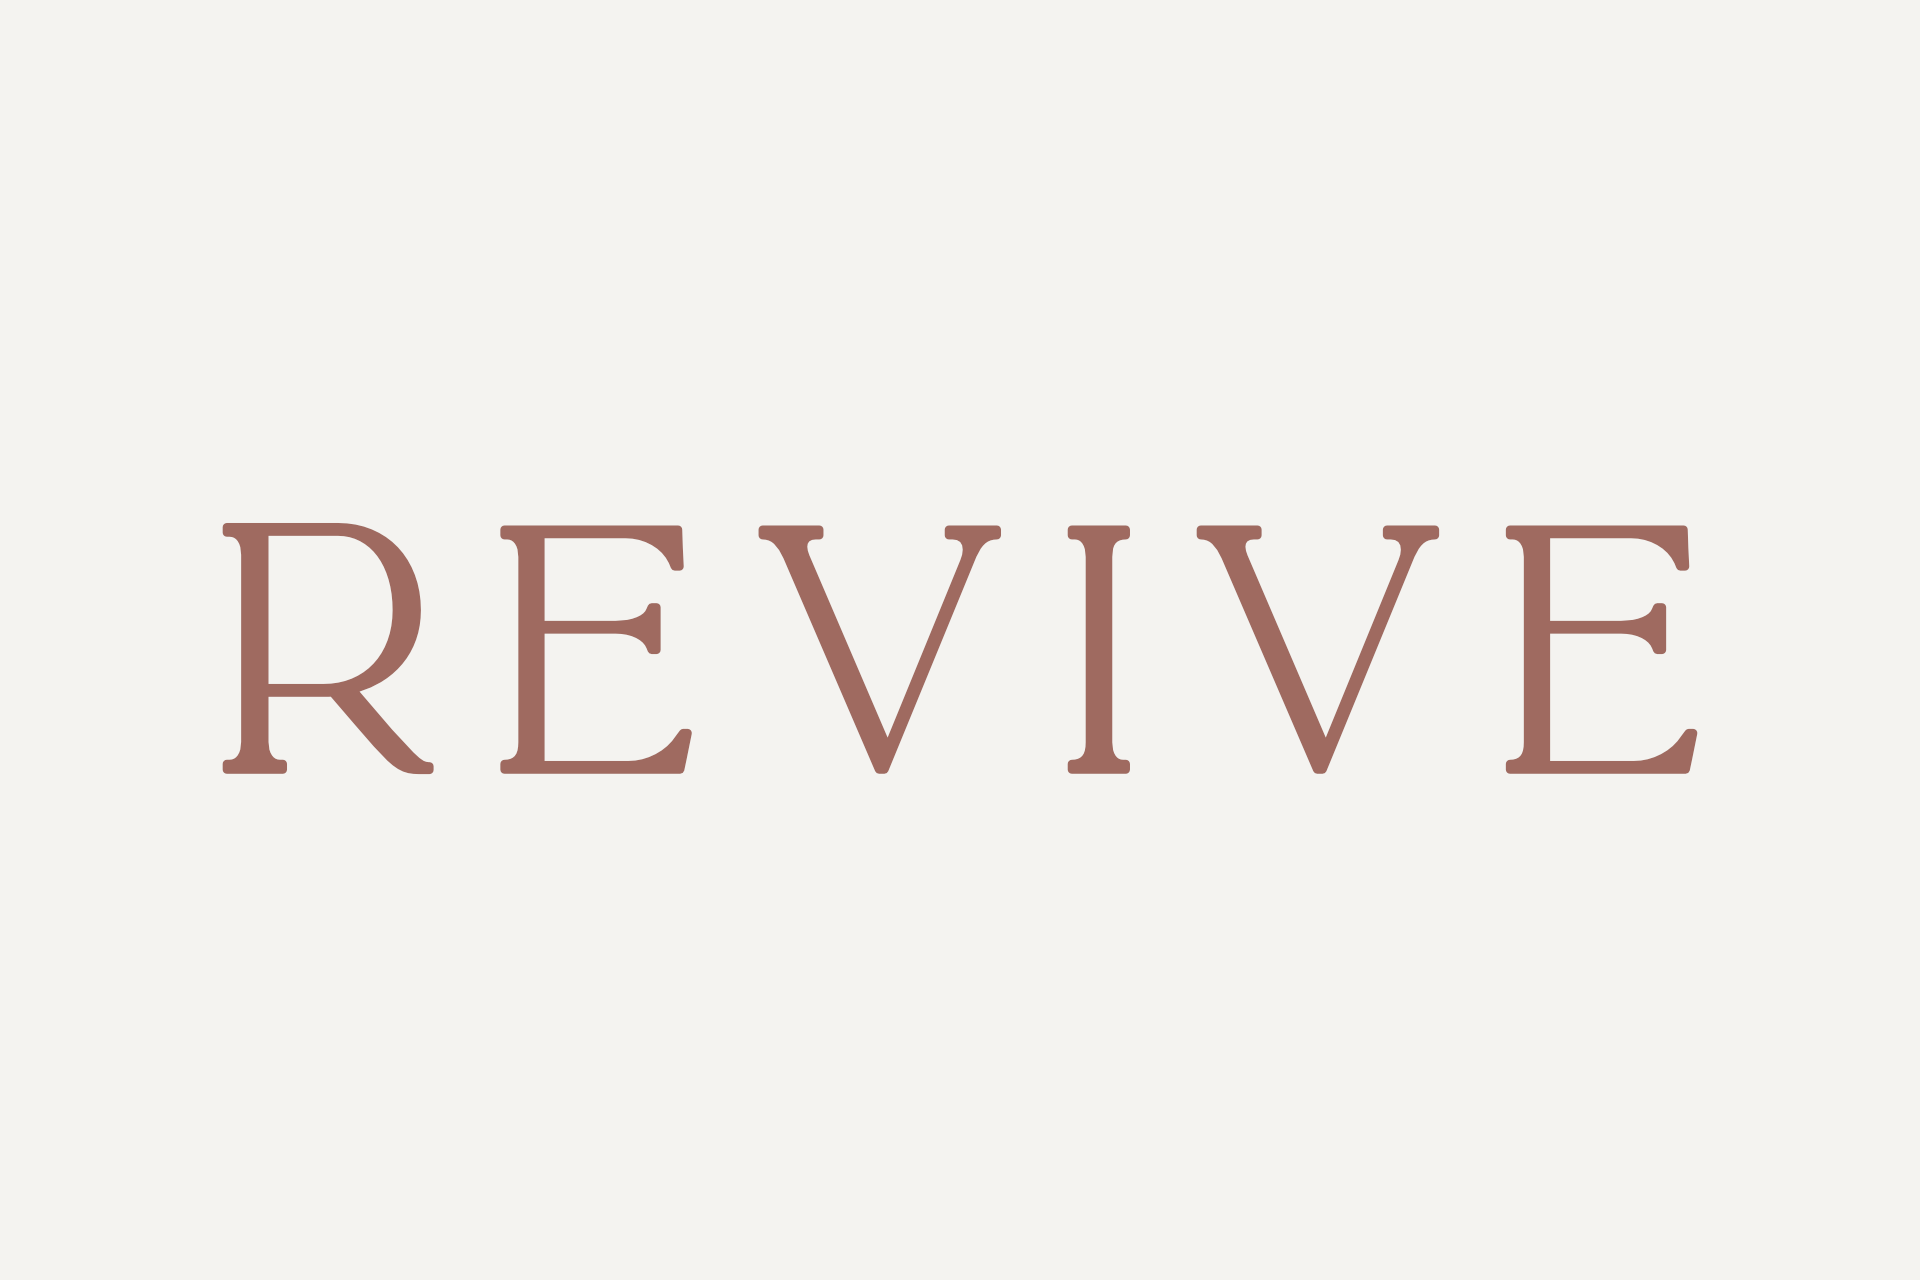 Revive logo